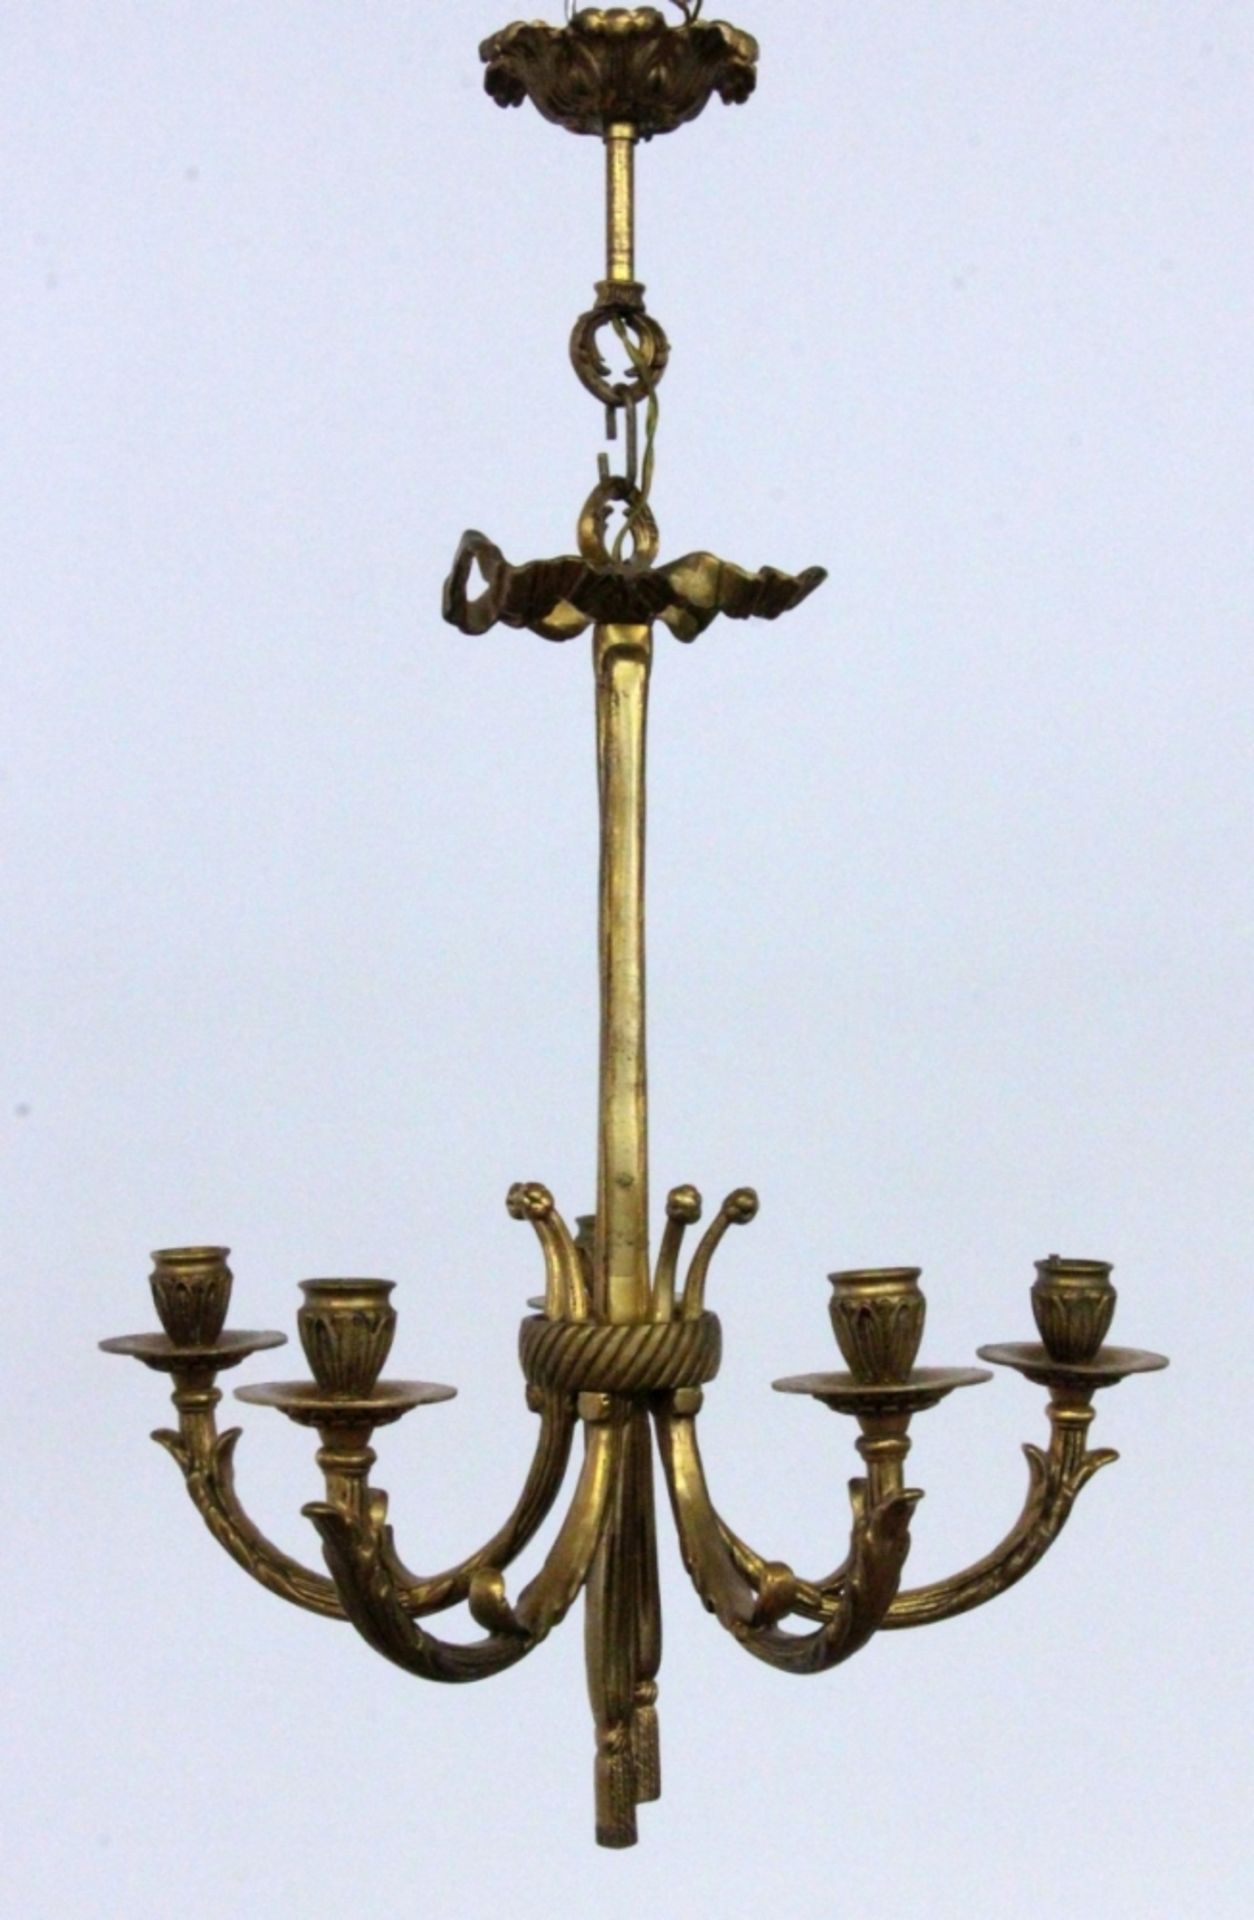 HÄNGELAMPE Frankreich um 1900 5-armiges vergoldetes Bronzegestell. Elektrifiziert. H. 63cm, D. ca.